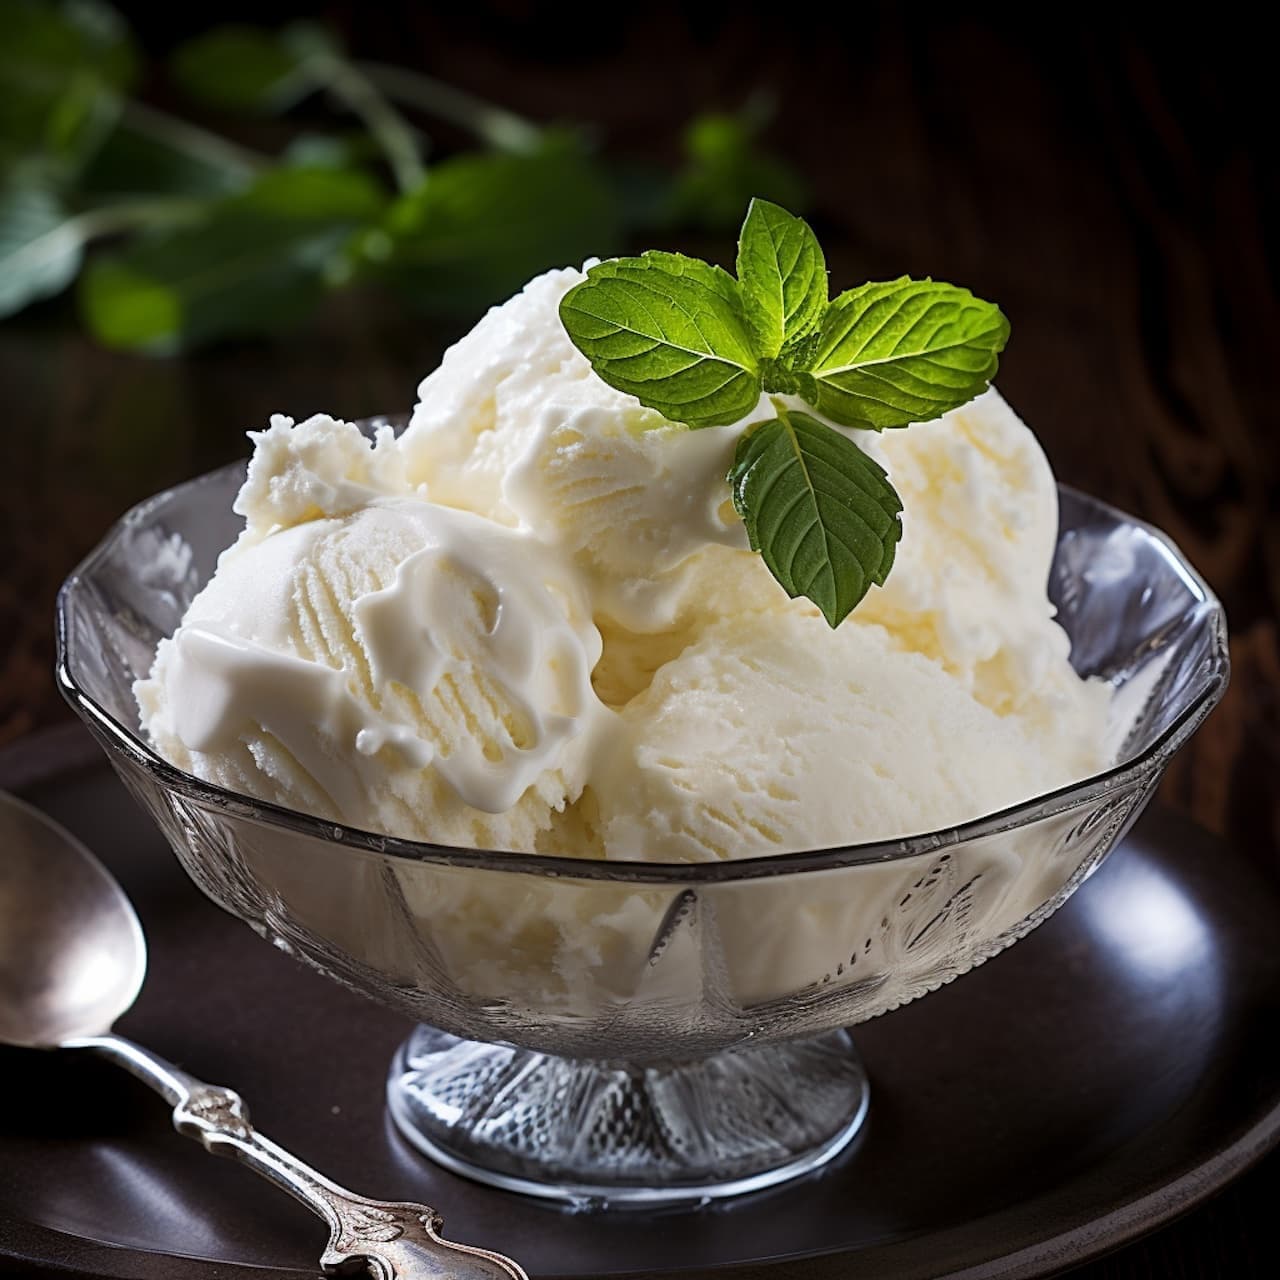 Condensed Milk Ice Cream" recipe with 3 ingredients